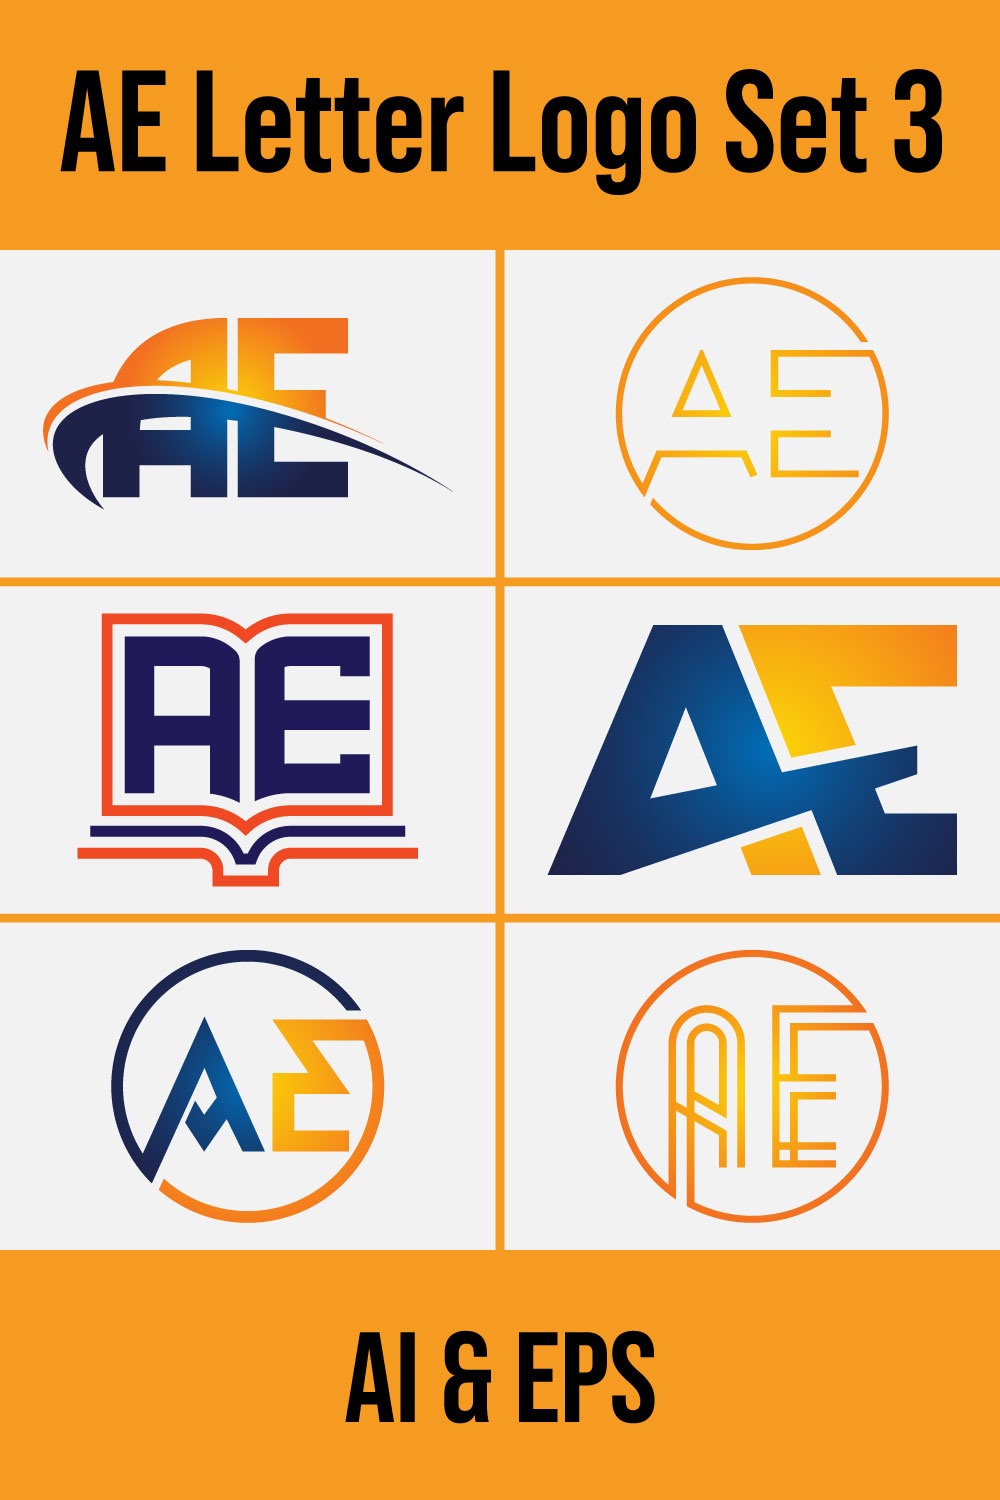 A-E Initial Letter Logo Design pinterest image.